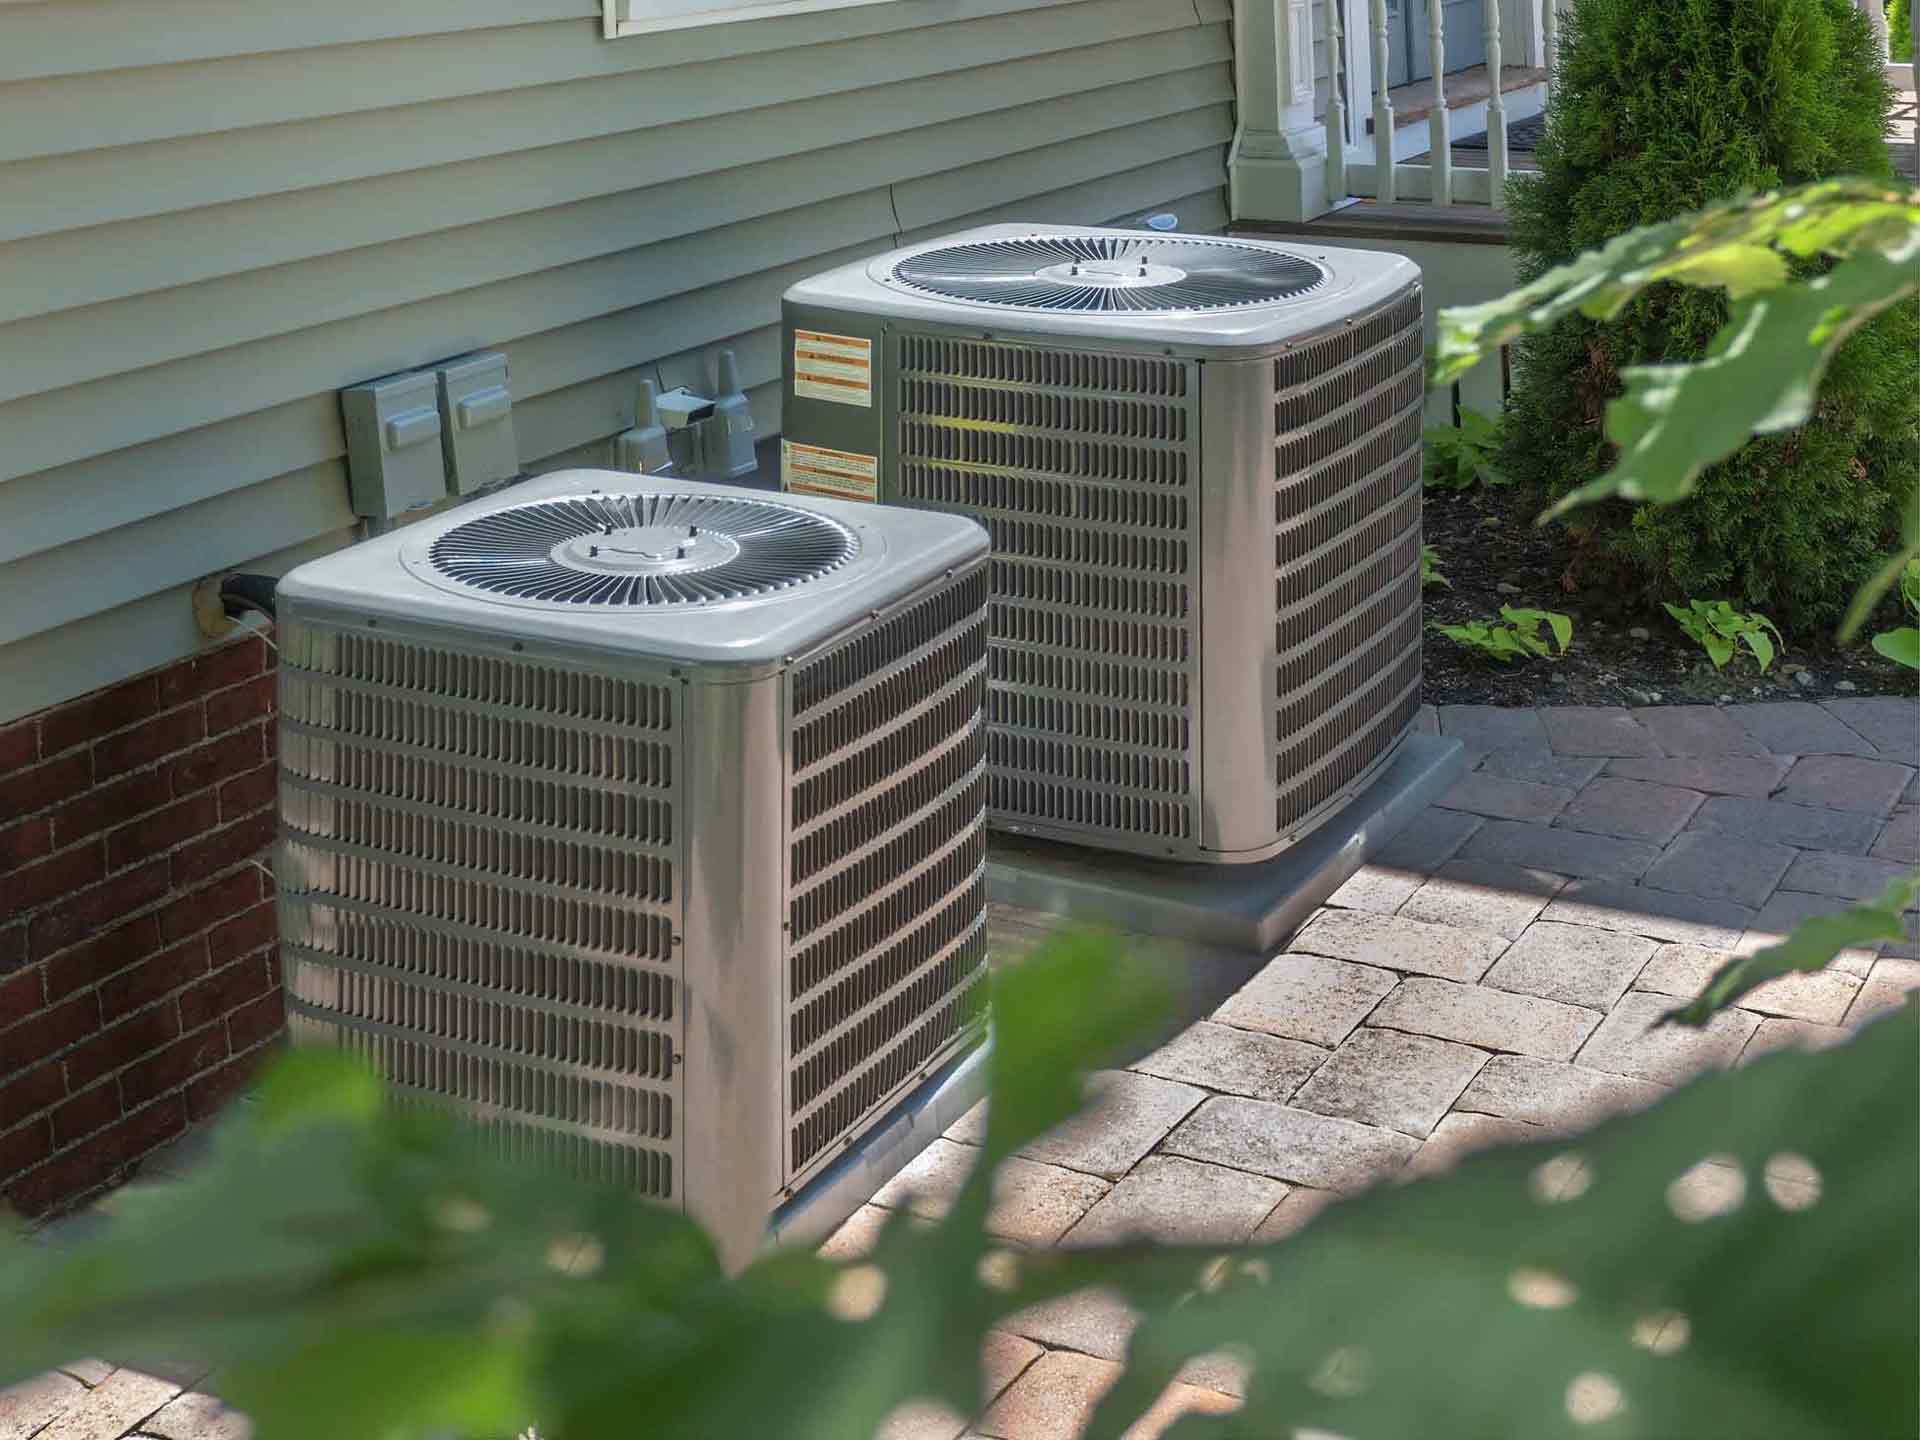 r18-air-conditioner-heat-pump-units-outside-home-16802750685355.jpg